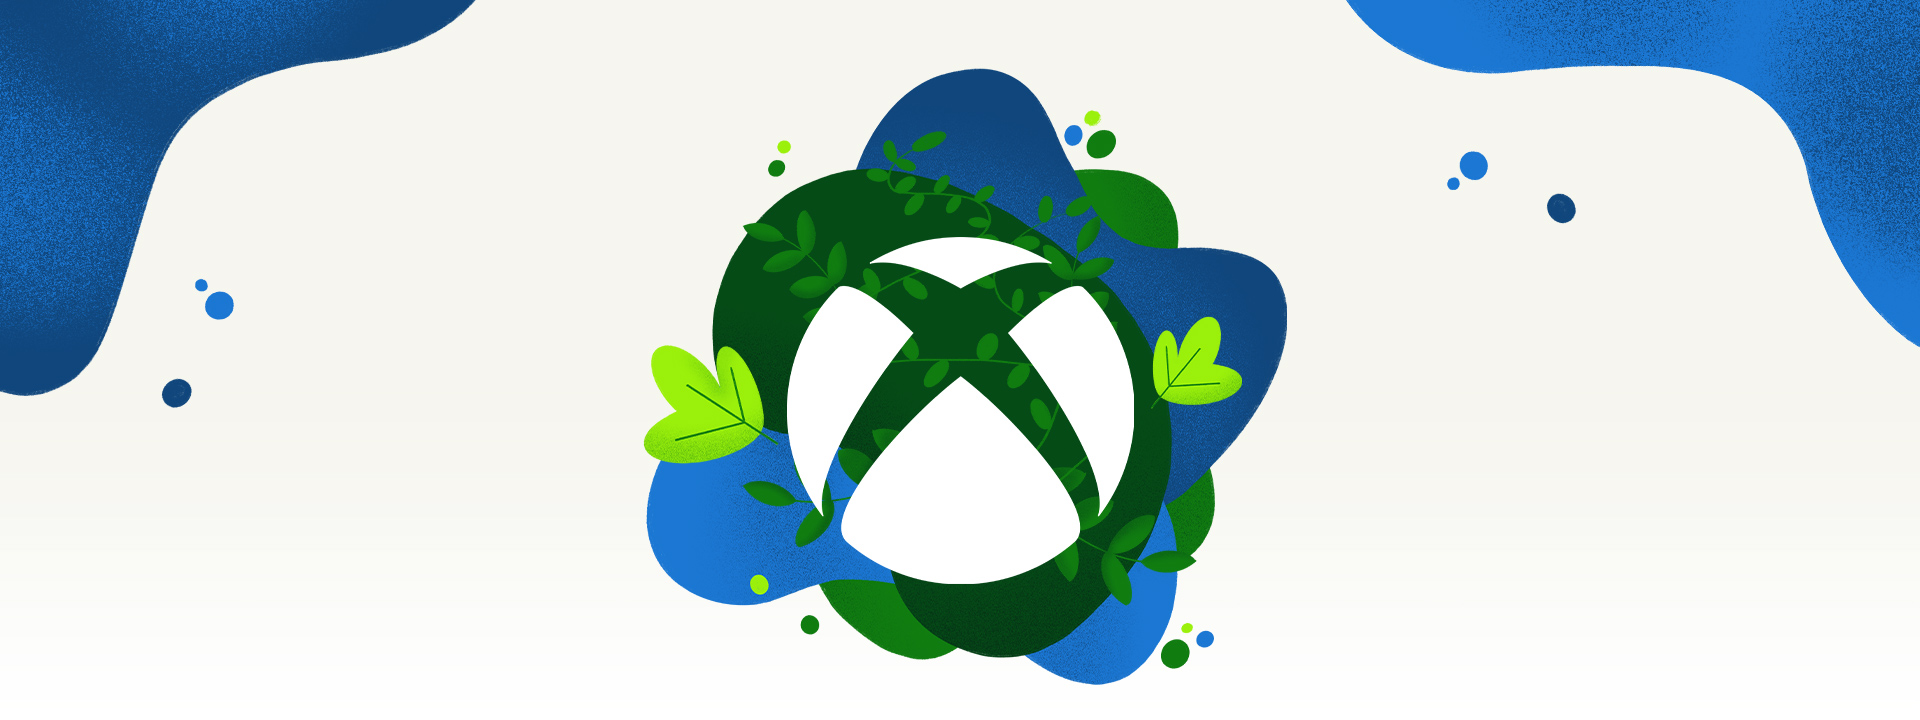 Xbox 標誌周圍環繞著植被和藍色的水花。